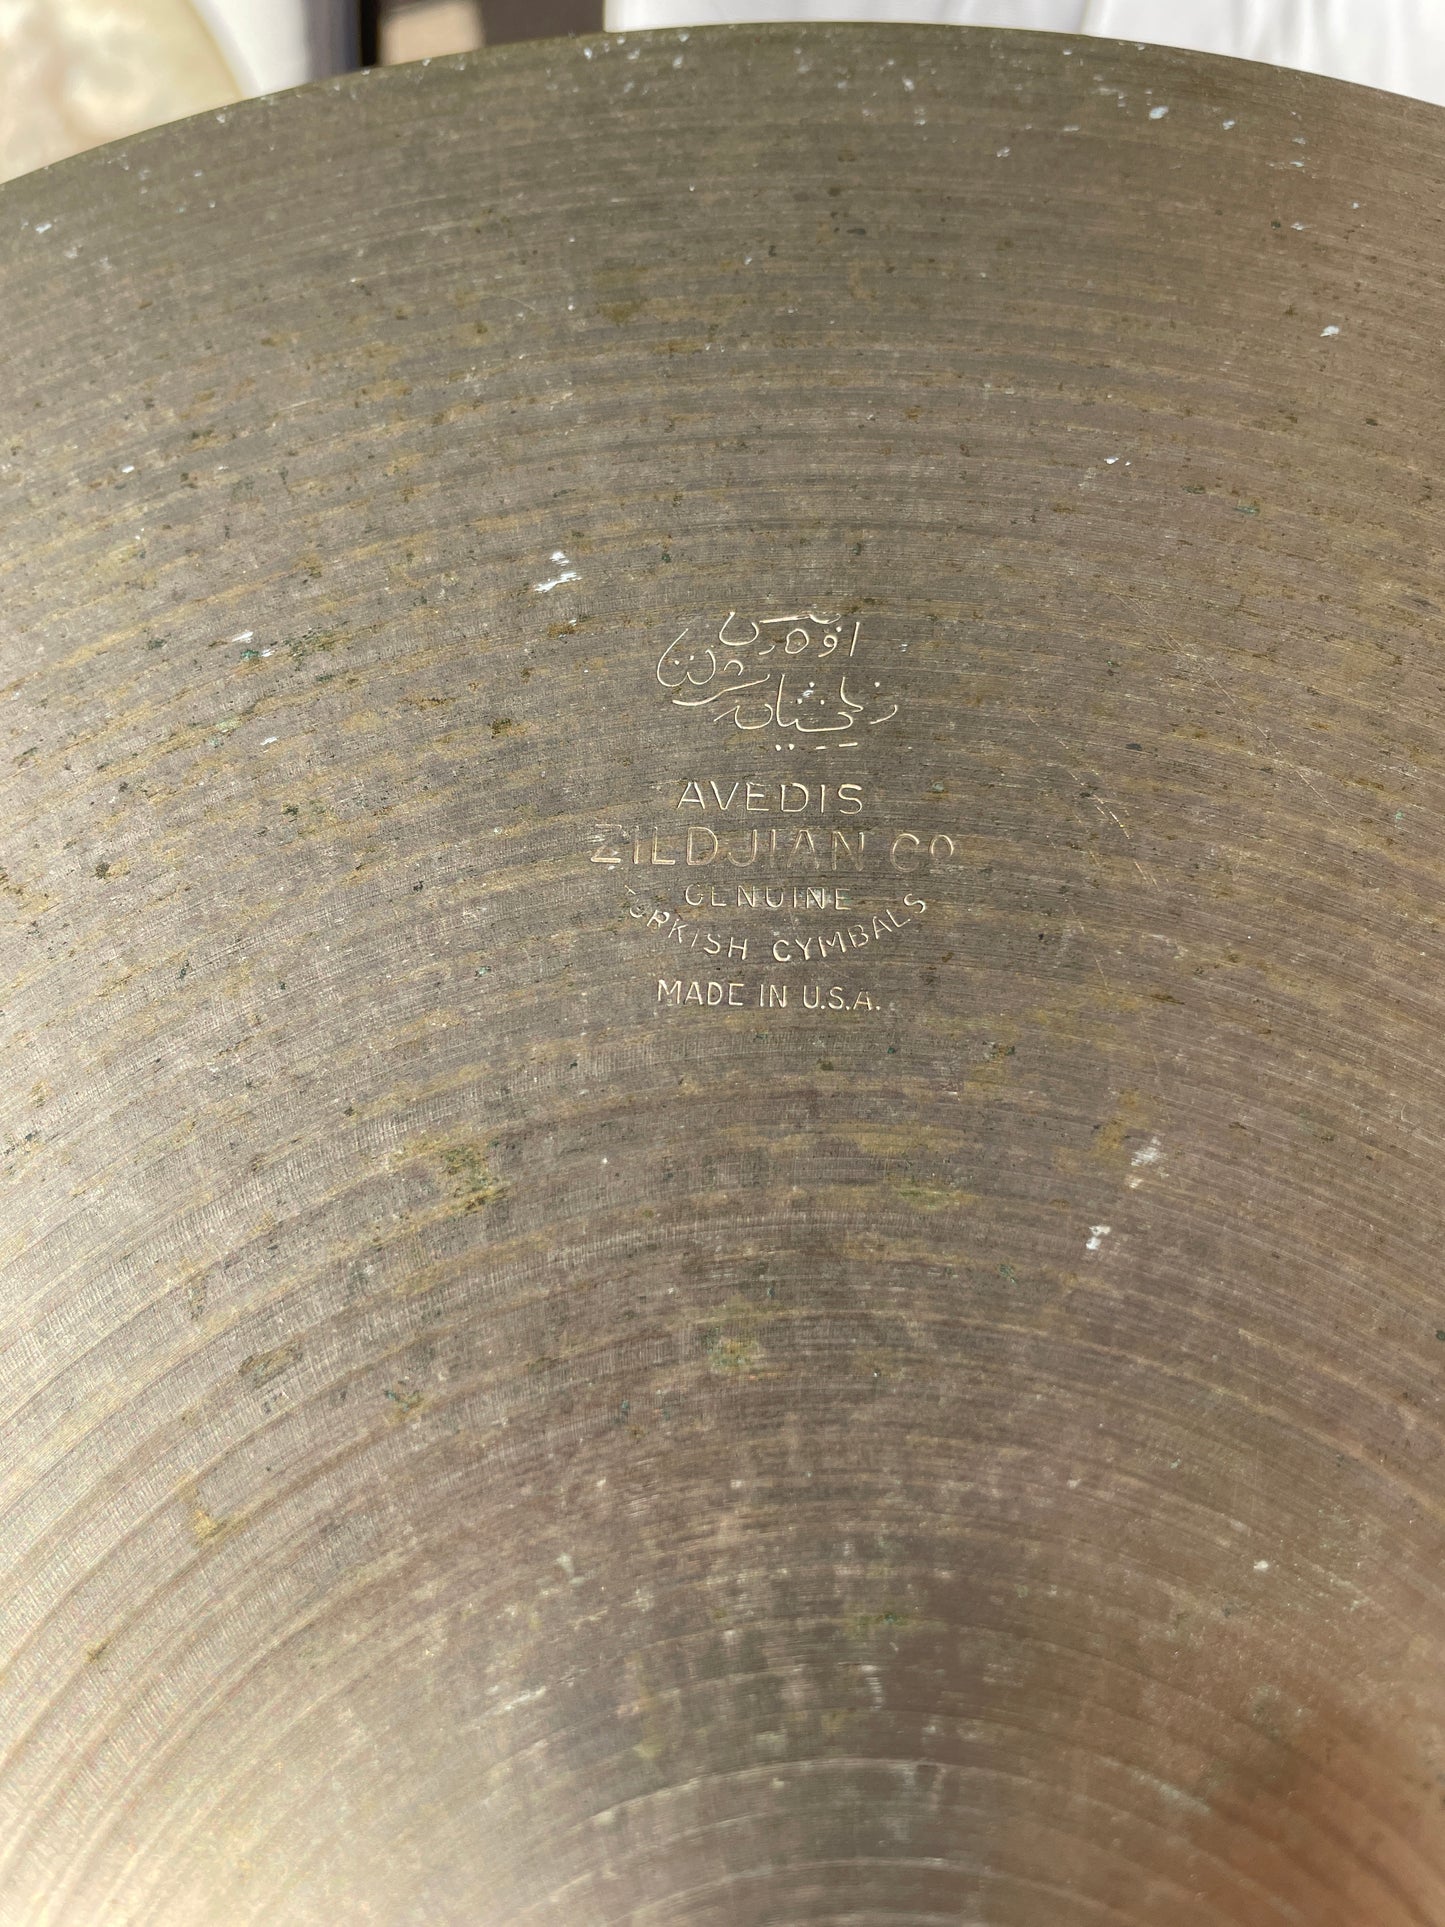 14" Zildjian A 1960s Hi-Hat Cymbal Pair 754g/792g #803 *Video Demo*